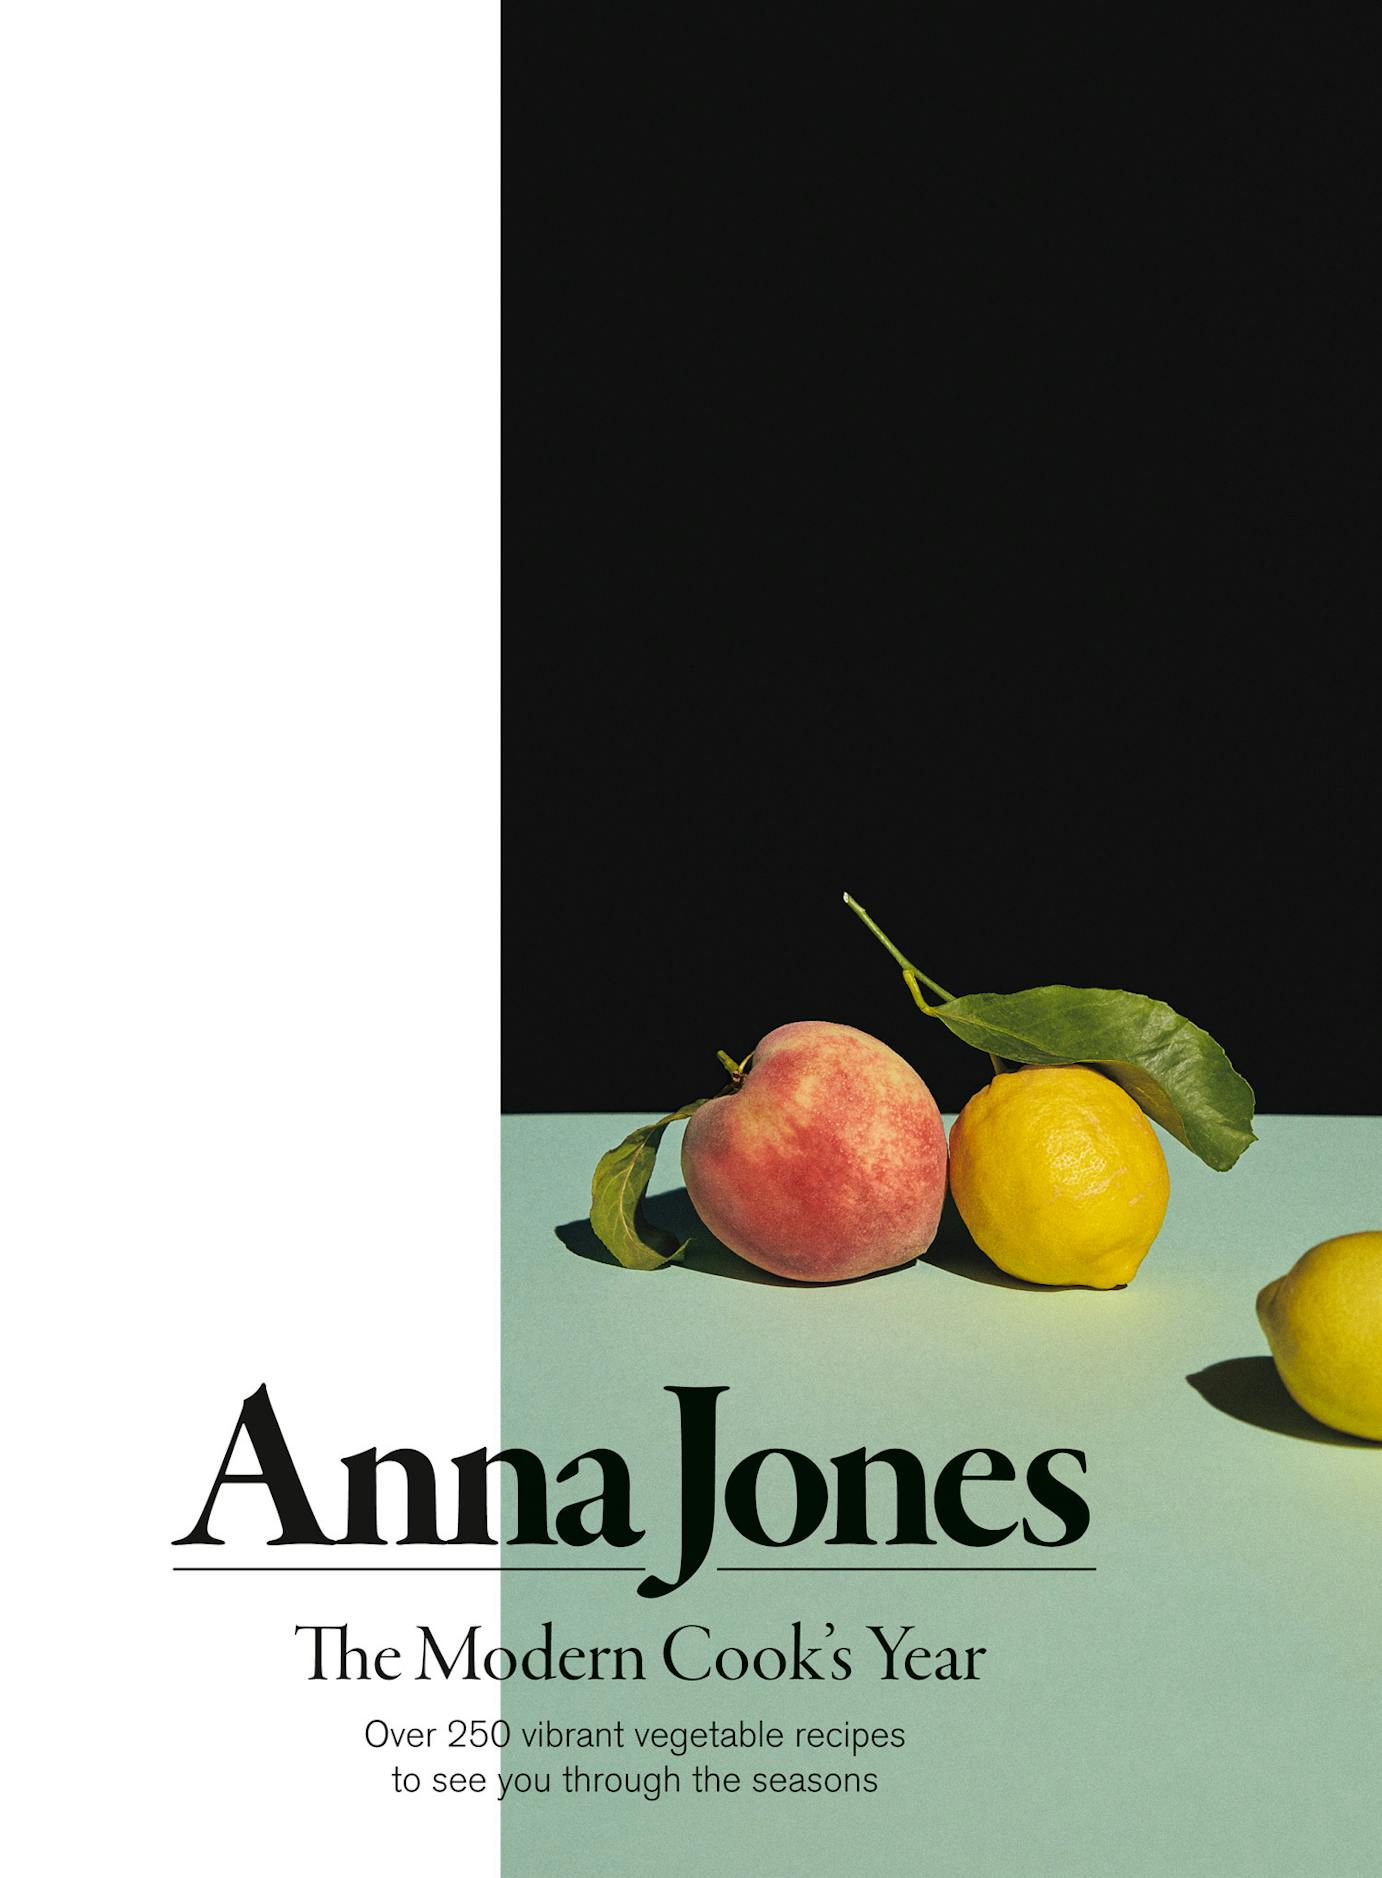 Anna jones The Modern Cooks Year book cover